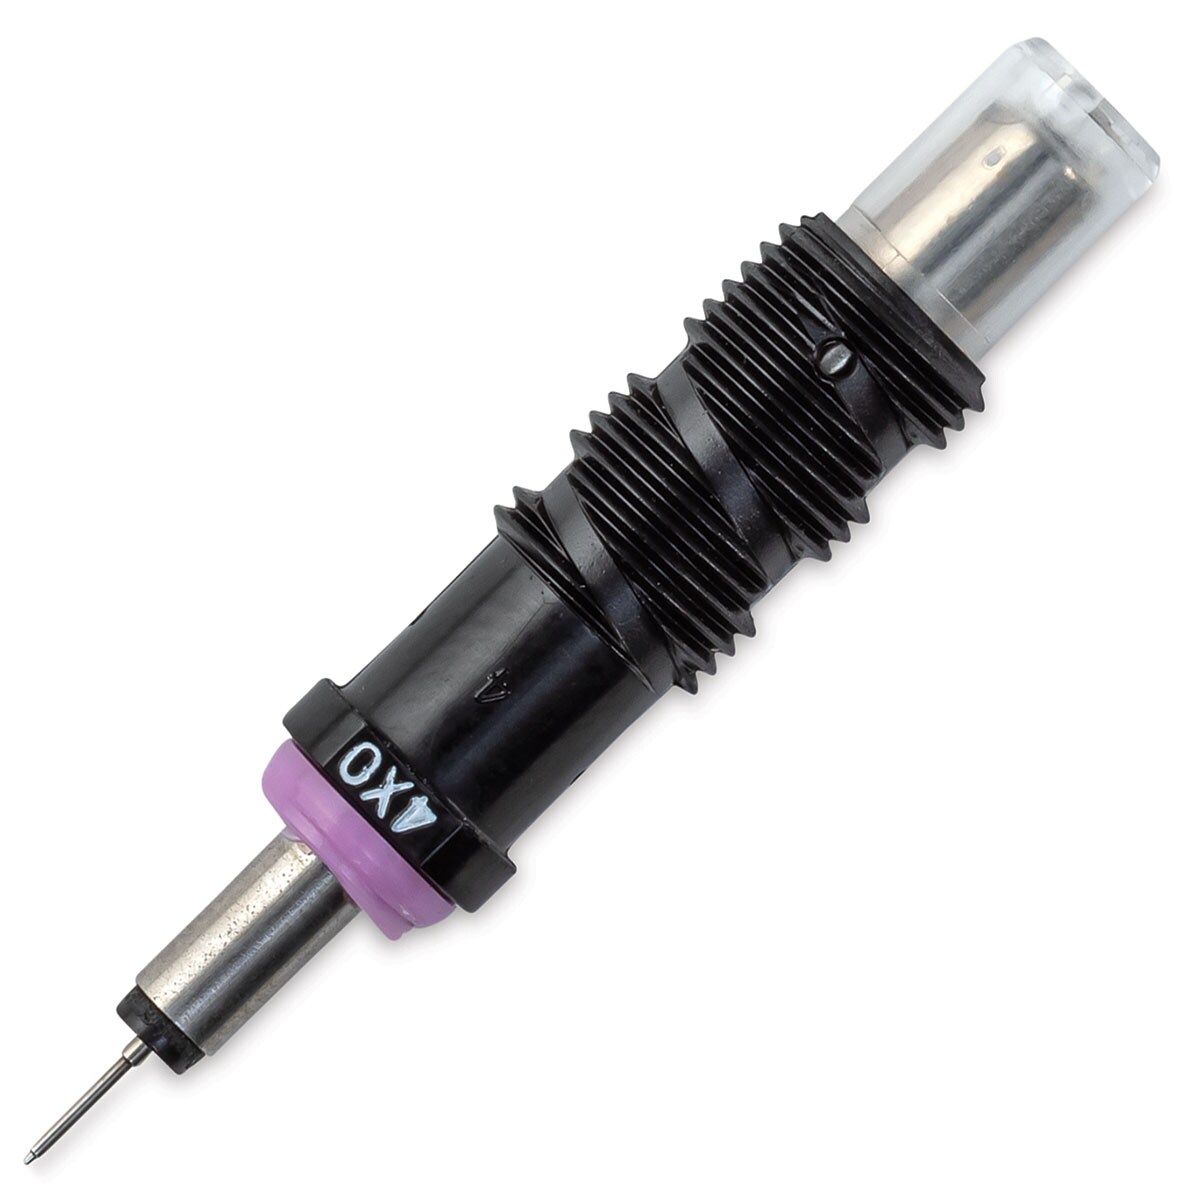 Koh-I-Noor Rapidograph Pen Replacement Point - 4x0, 0.18 mm Tip